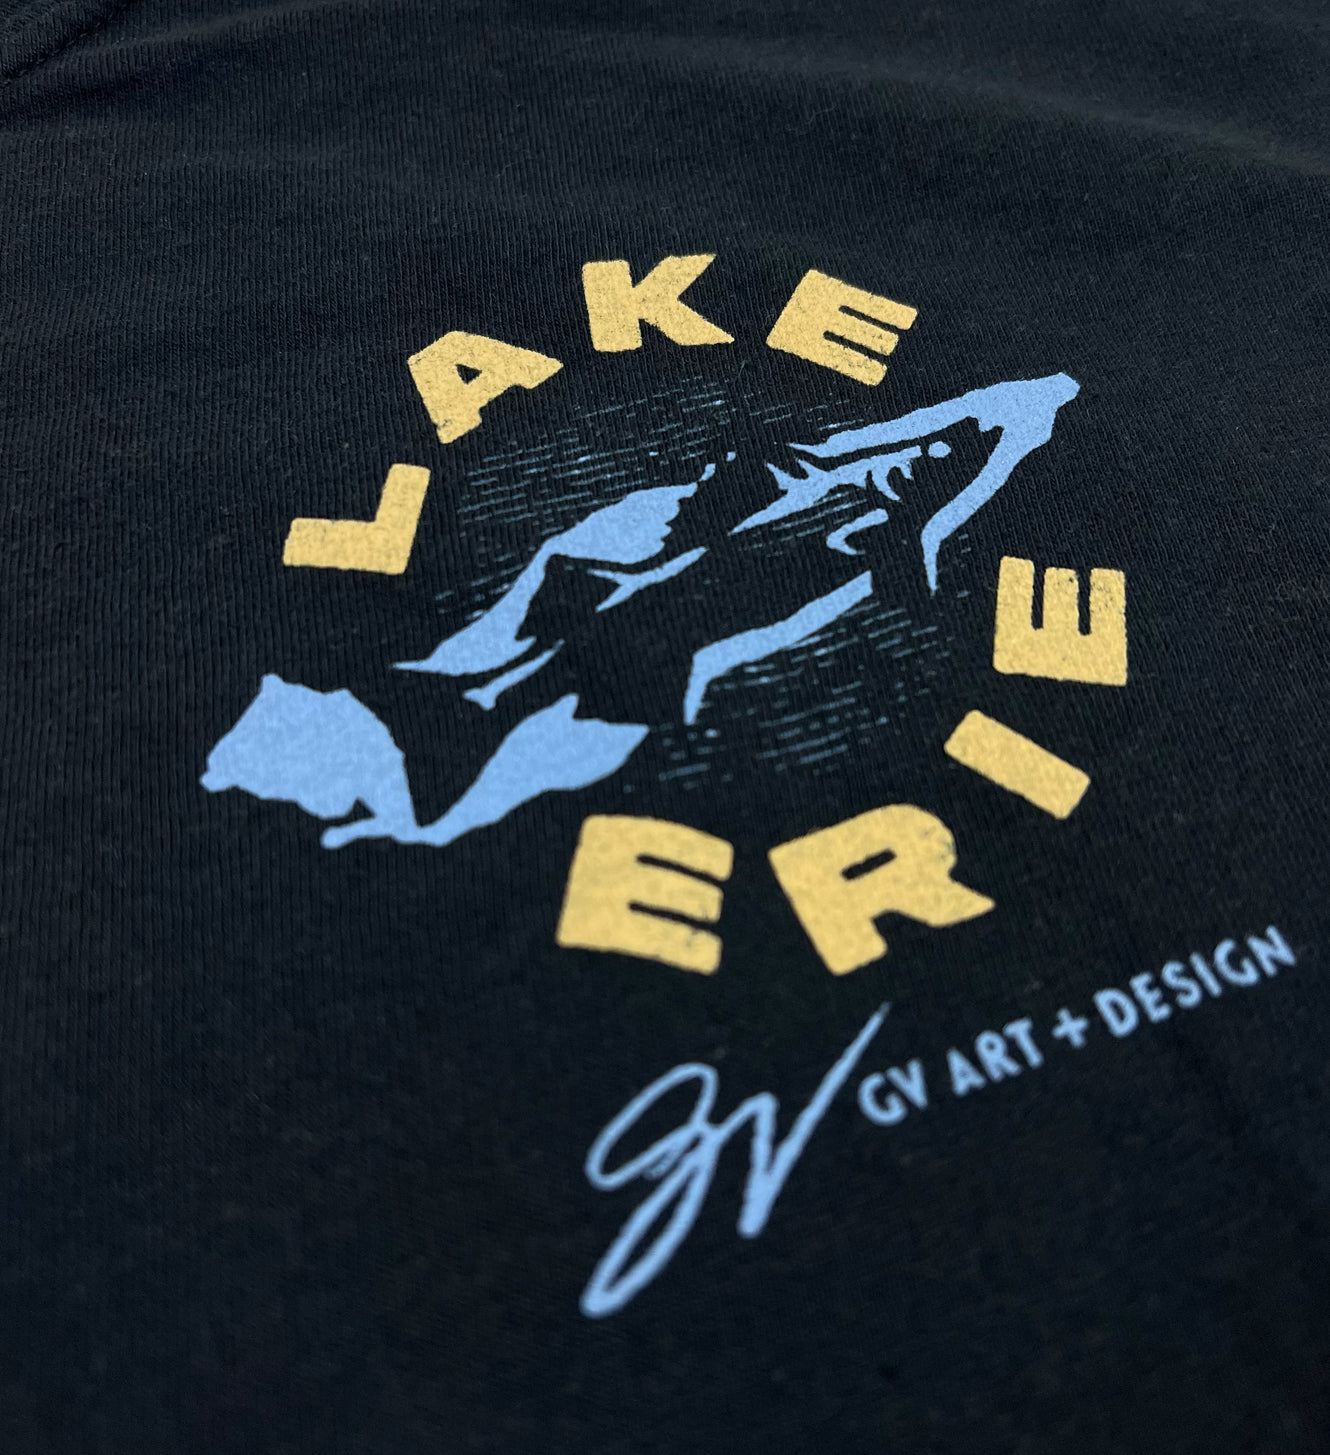 Lake Erie Fishing Long Sleeve T shirt